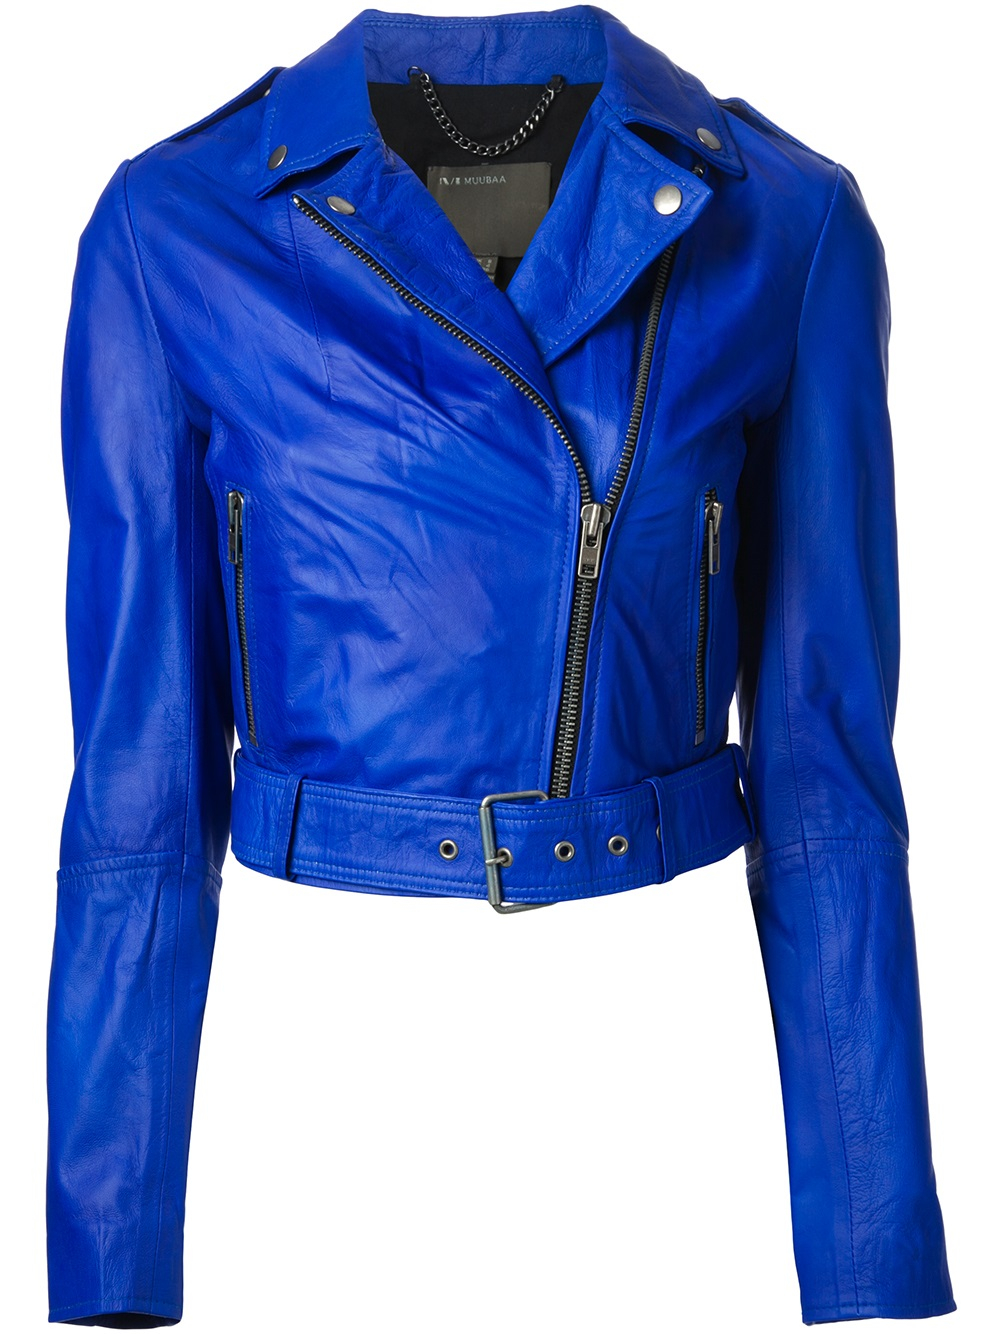 Lyst - Muubaa Sembri Biker Jacket in Blue